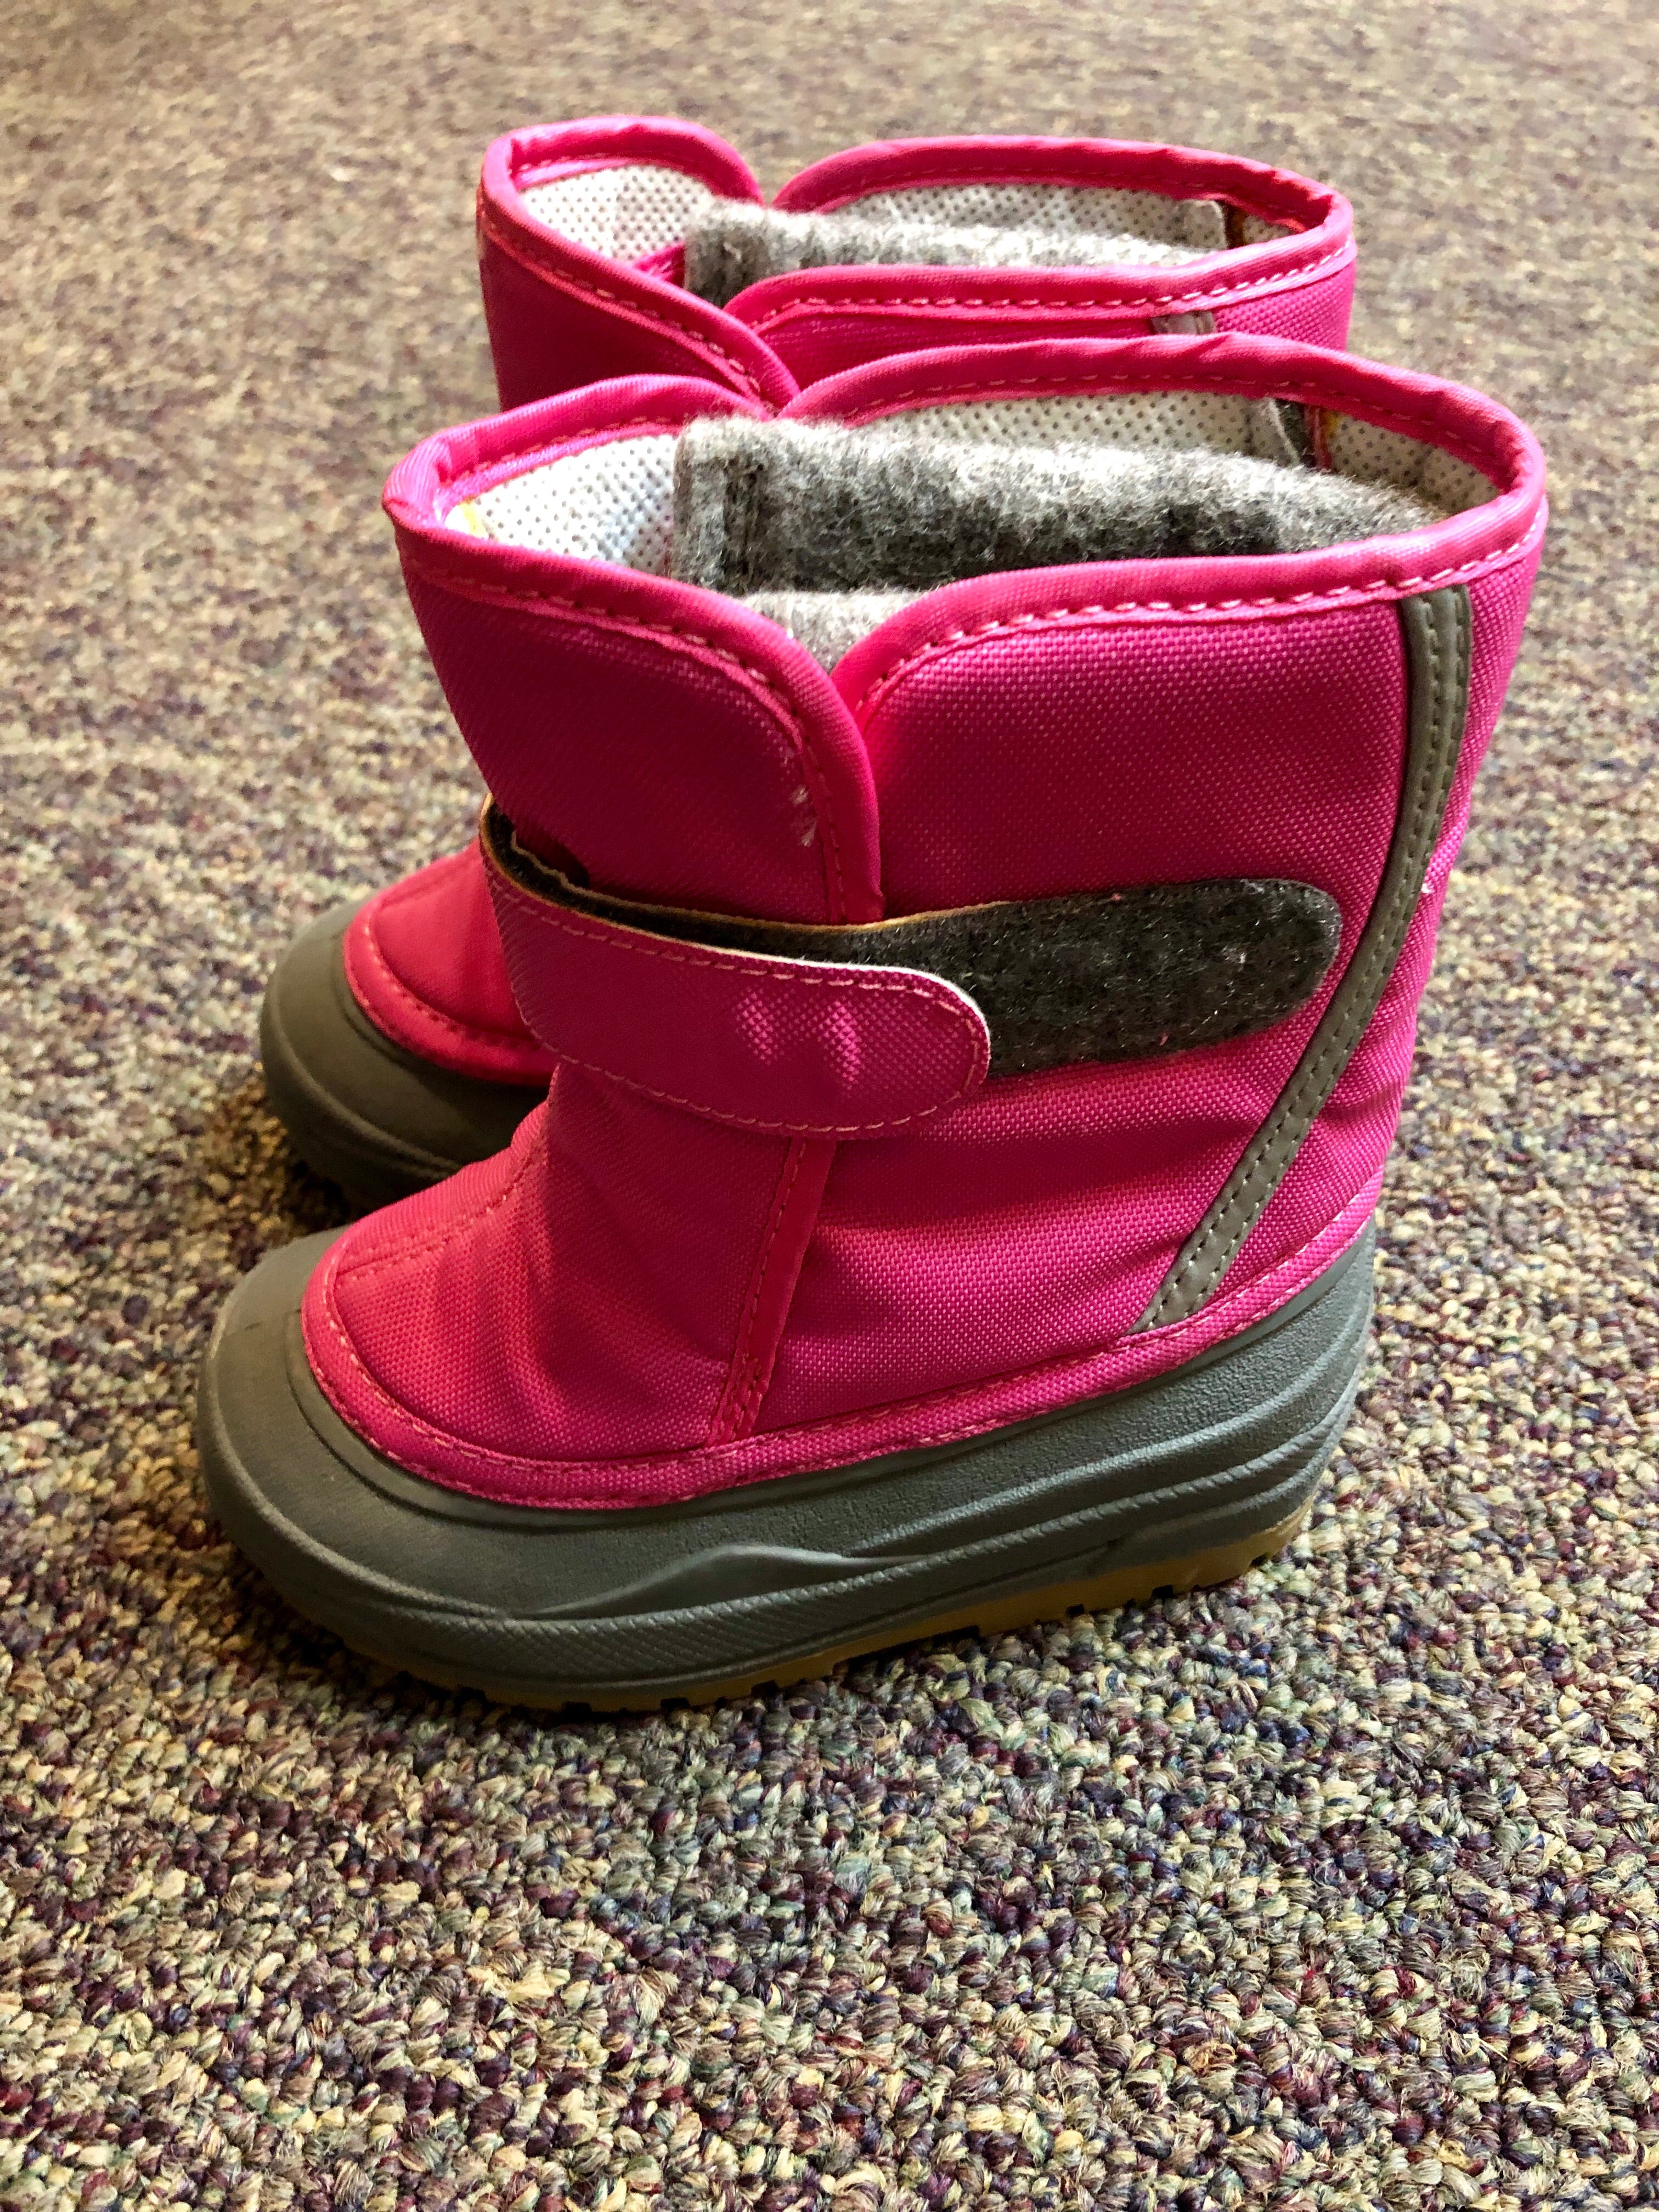 Toddler Size 8 L.L.Bean Snow Boots